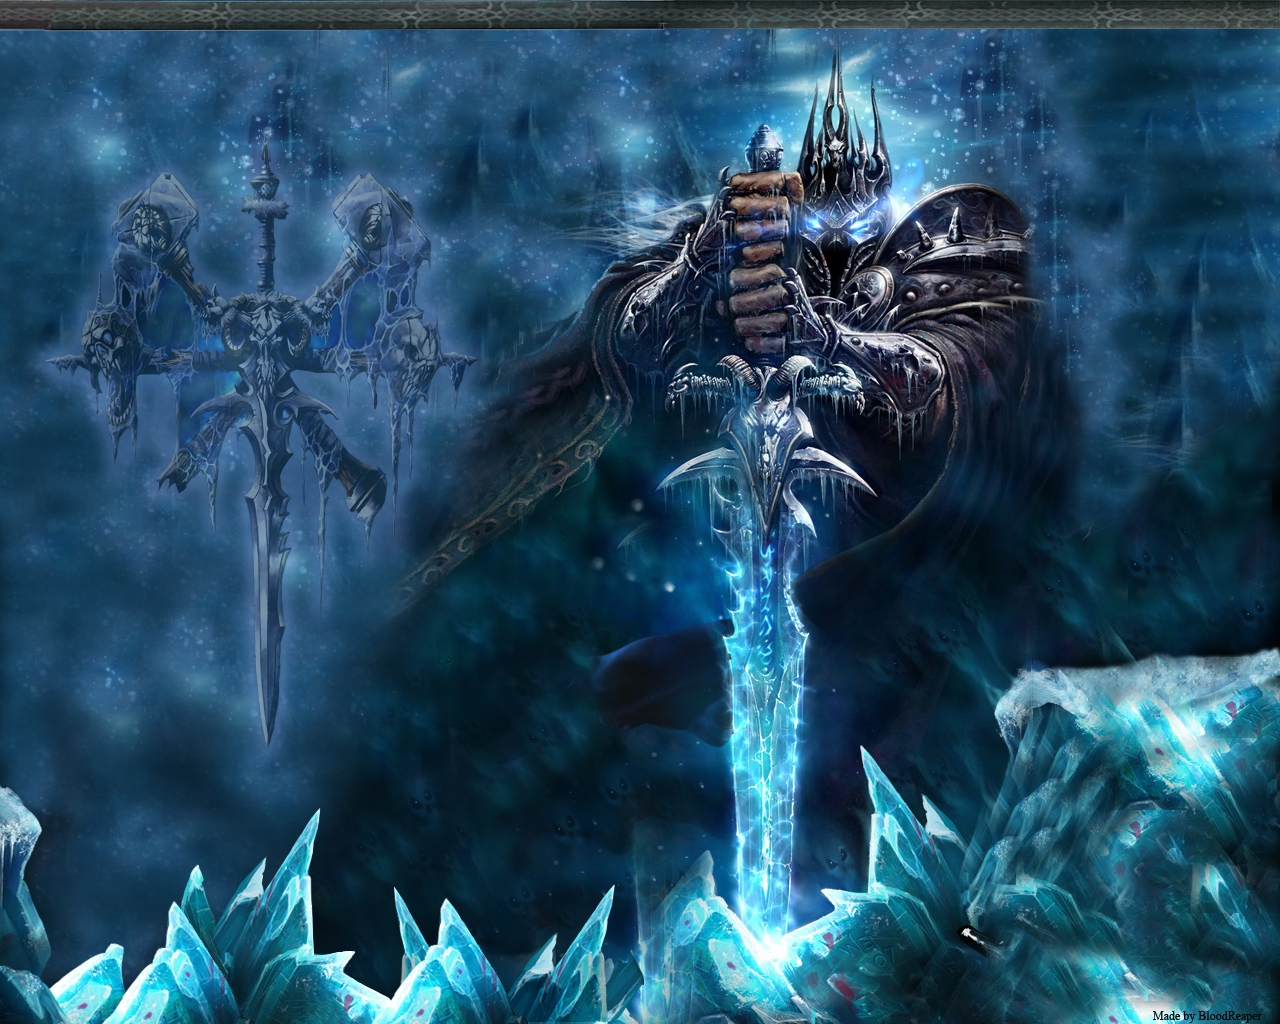 World of Warcraft Lich King